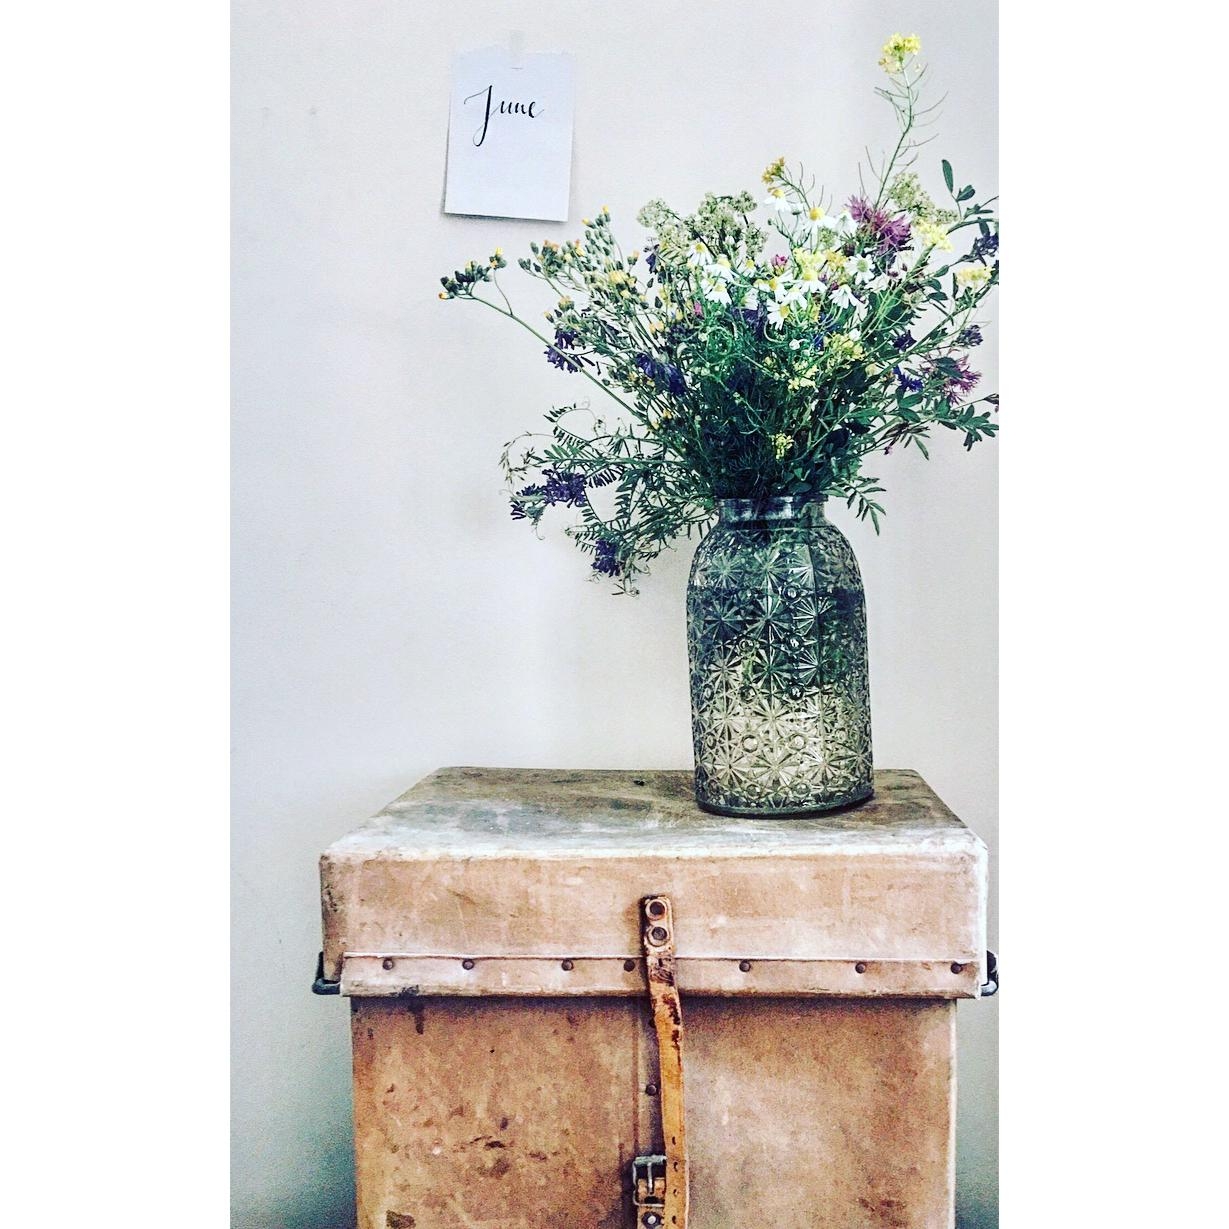 hellojune#juni#flowers#blumen#wiese#kiste#vintage#antik#calligraphy#couchliebt#repost#vase#interior#home#deko#kalender